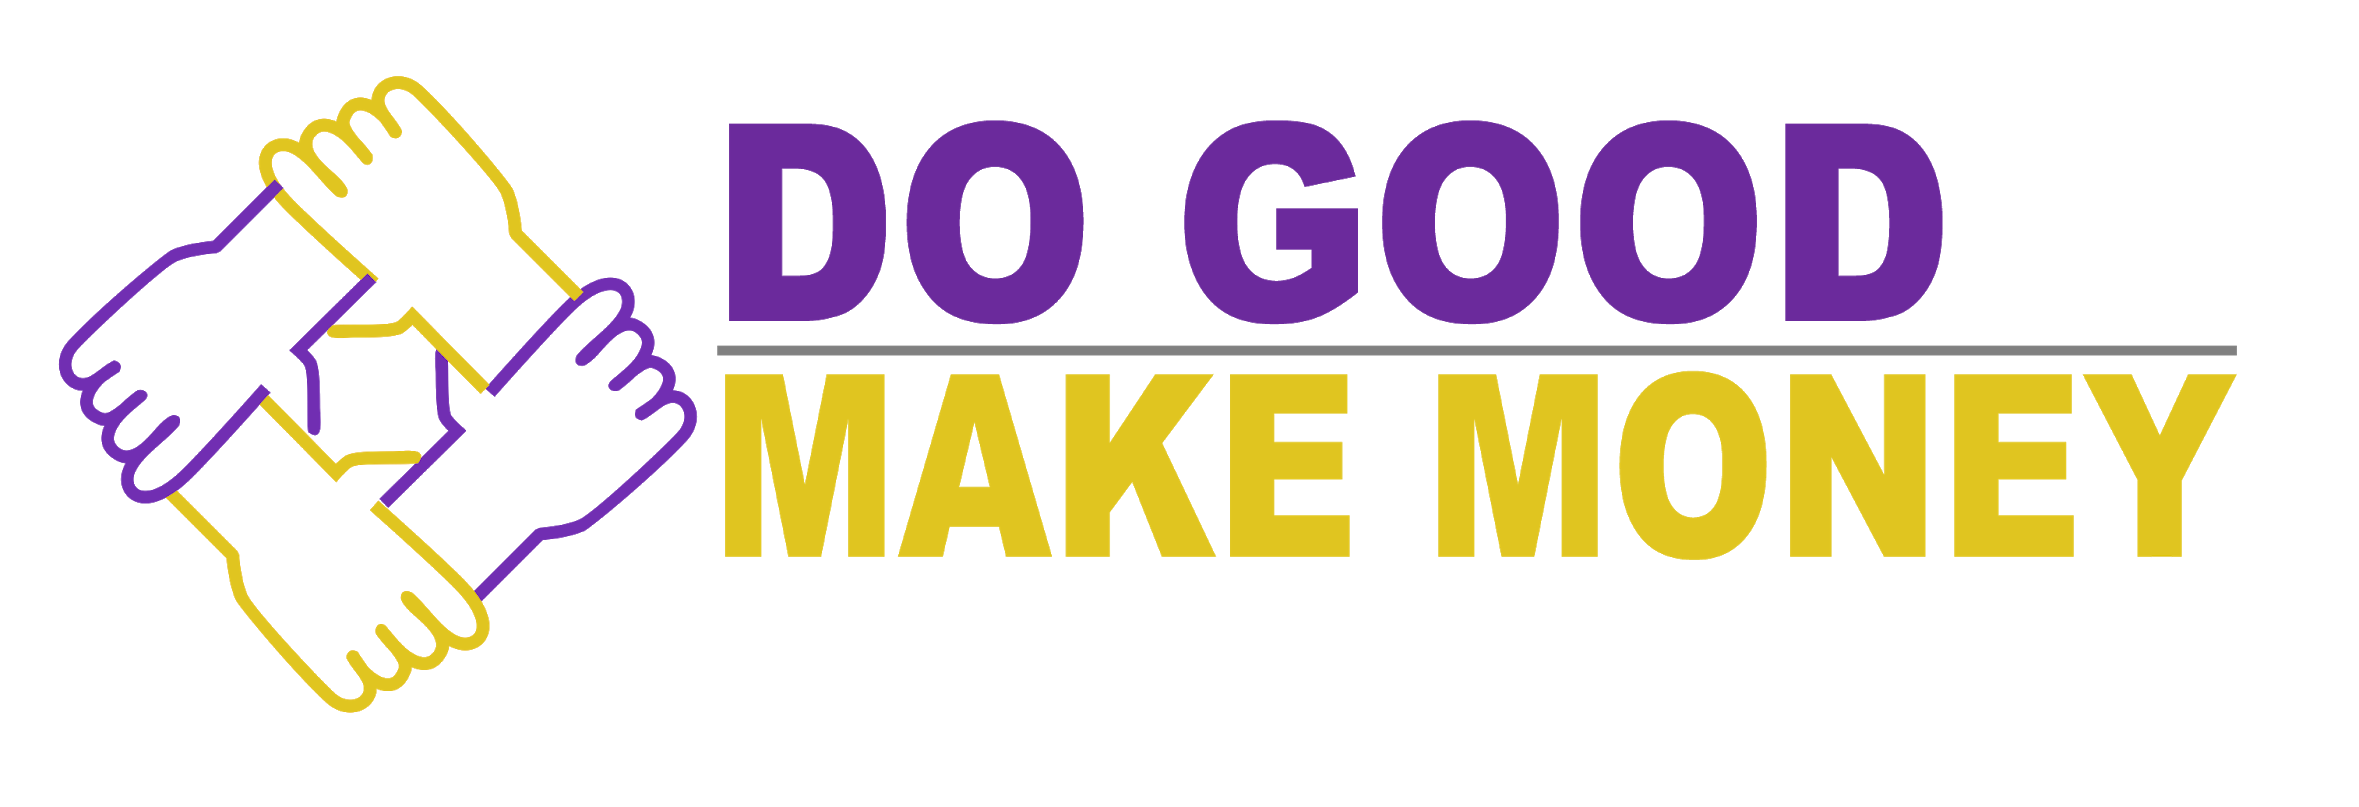 Do Good and Make Money Super Summit 2019